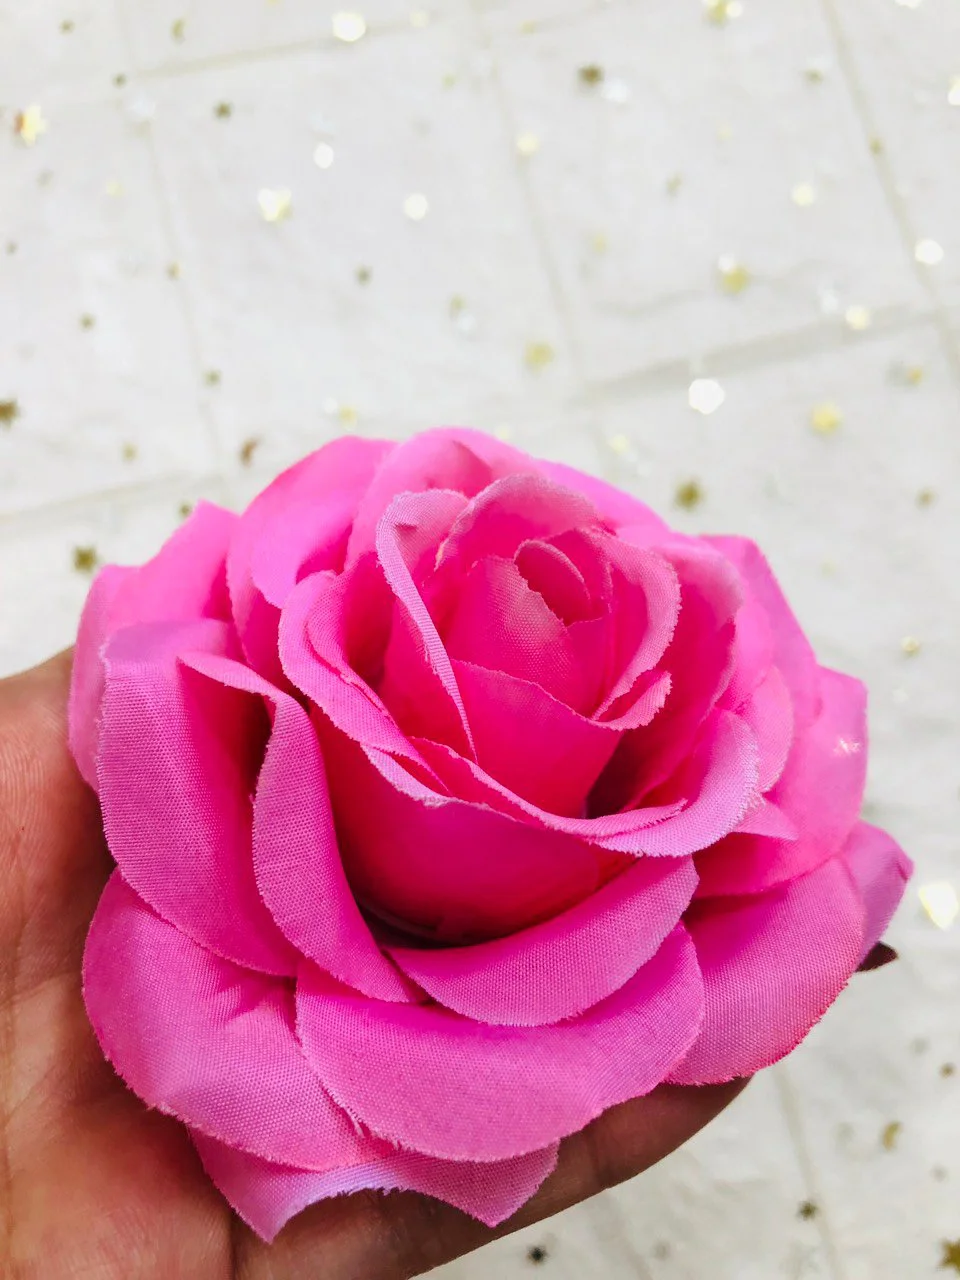 Hoa hồng đậm